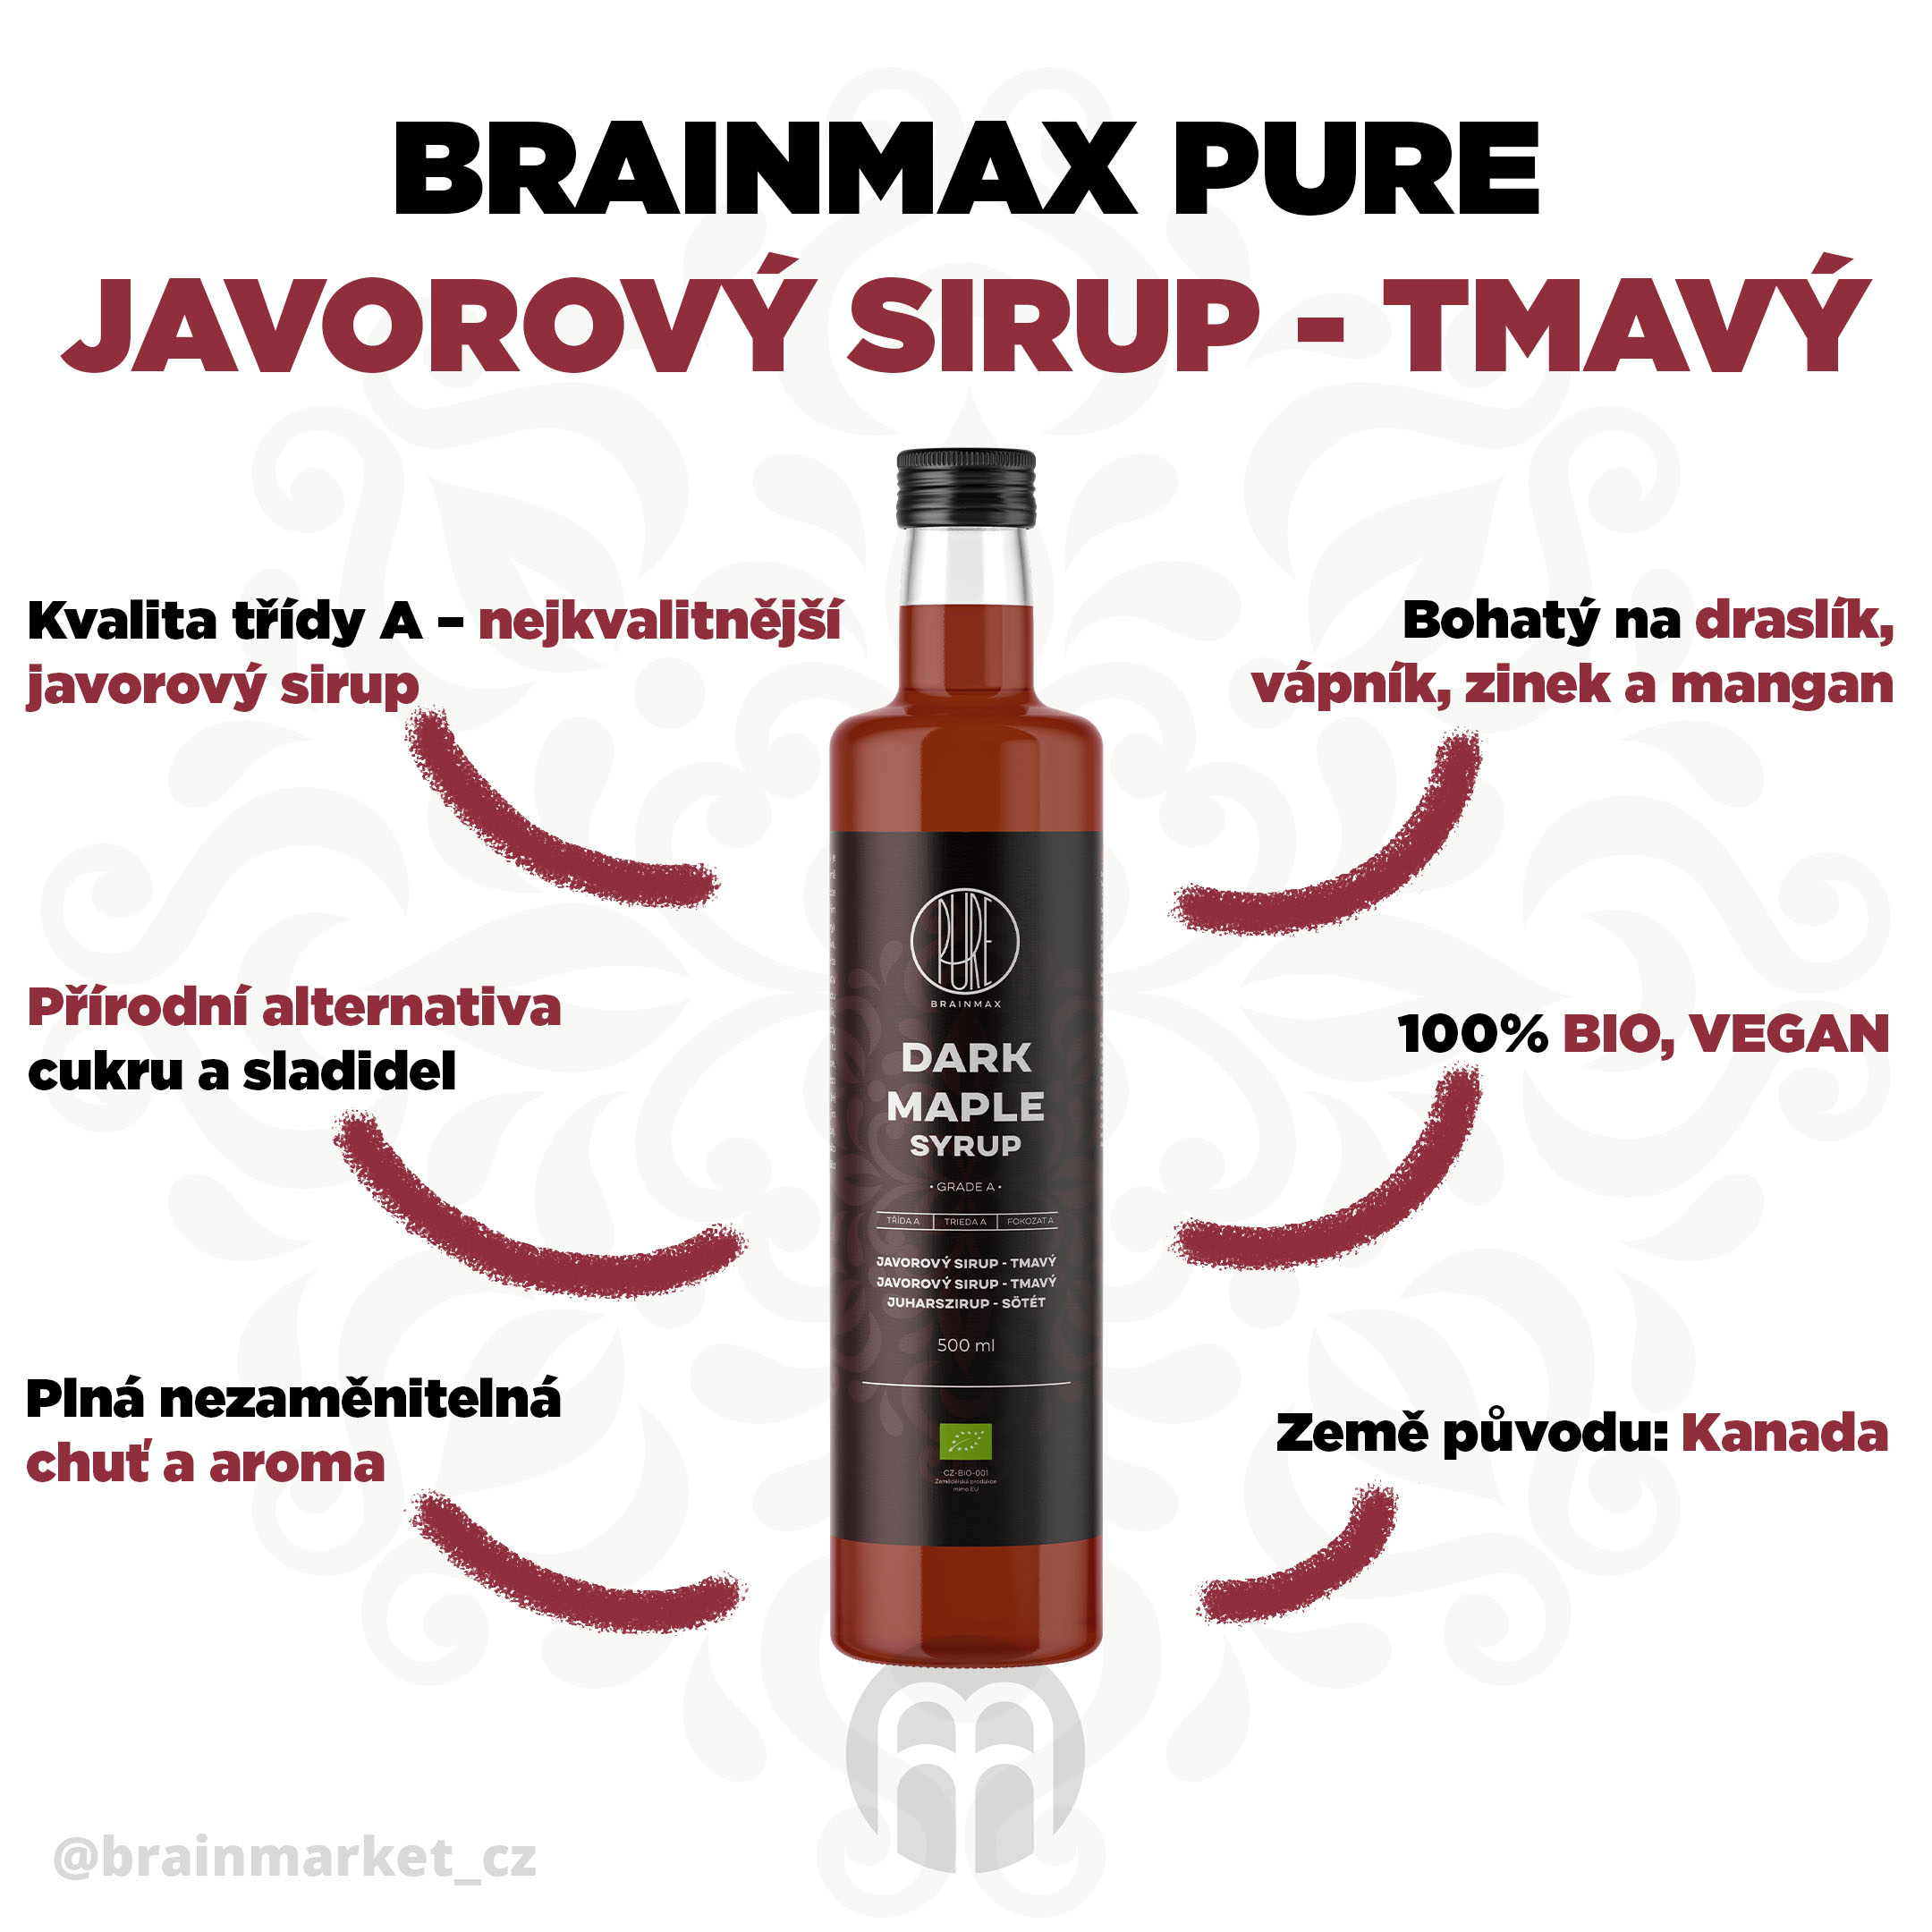 brainmax pure javorovy sirup infografika brainmarket CZ